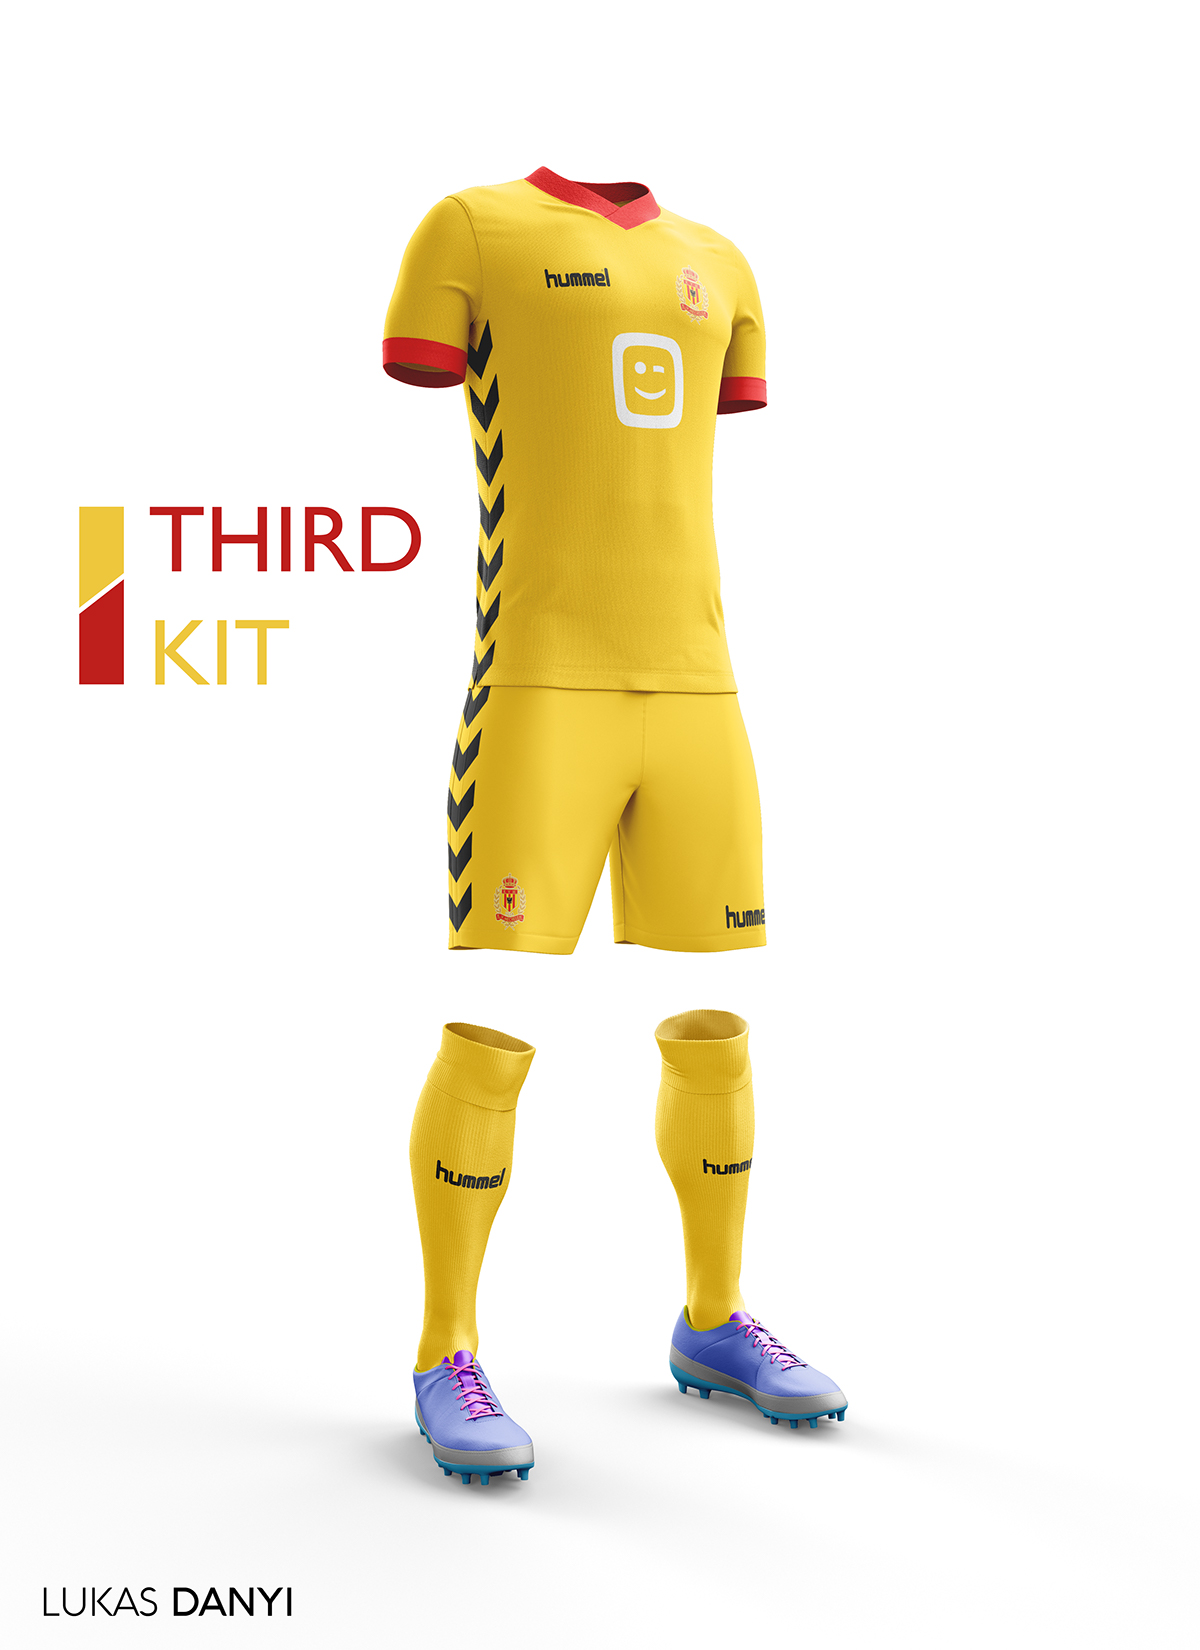 ProLeague hummel kit football soccer Soccer Kit Football kit belgium